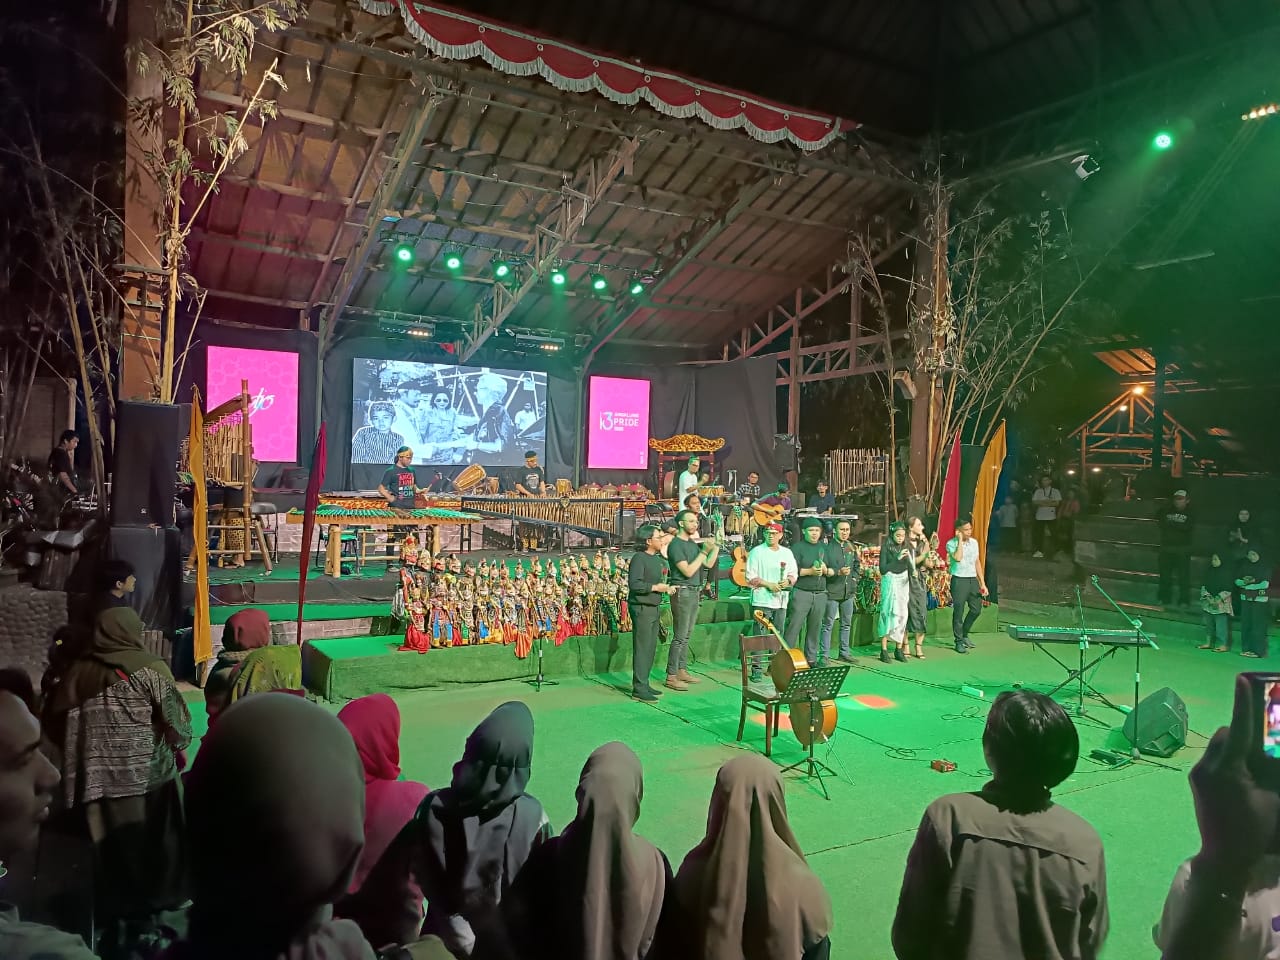 Persembahan Musik Bagi Para Pendidik, Angklung Udjo Kolab Bareng Musisi Bandung / Istimewa